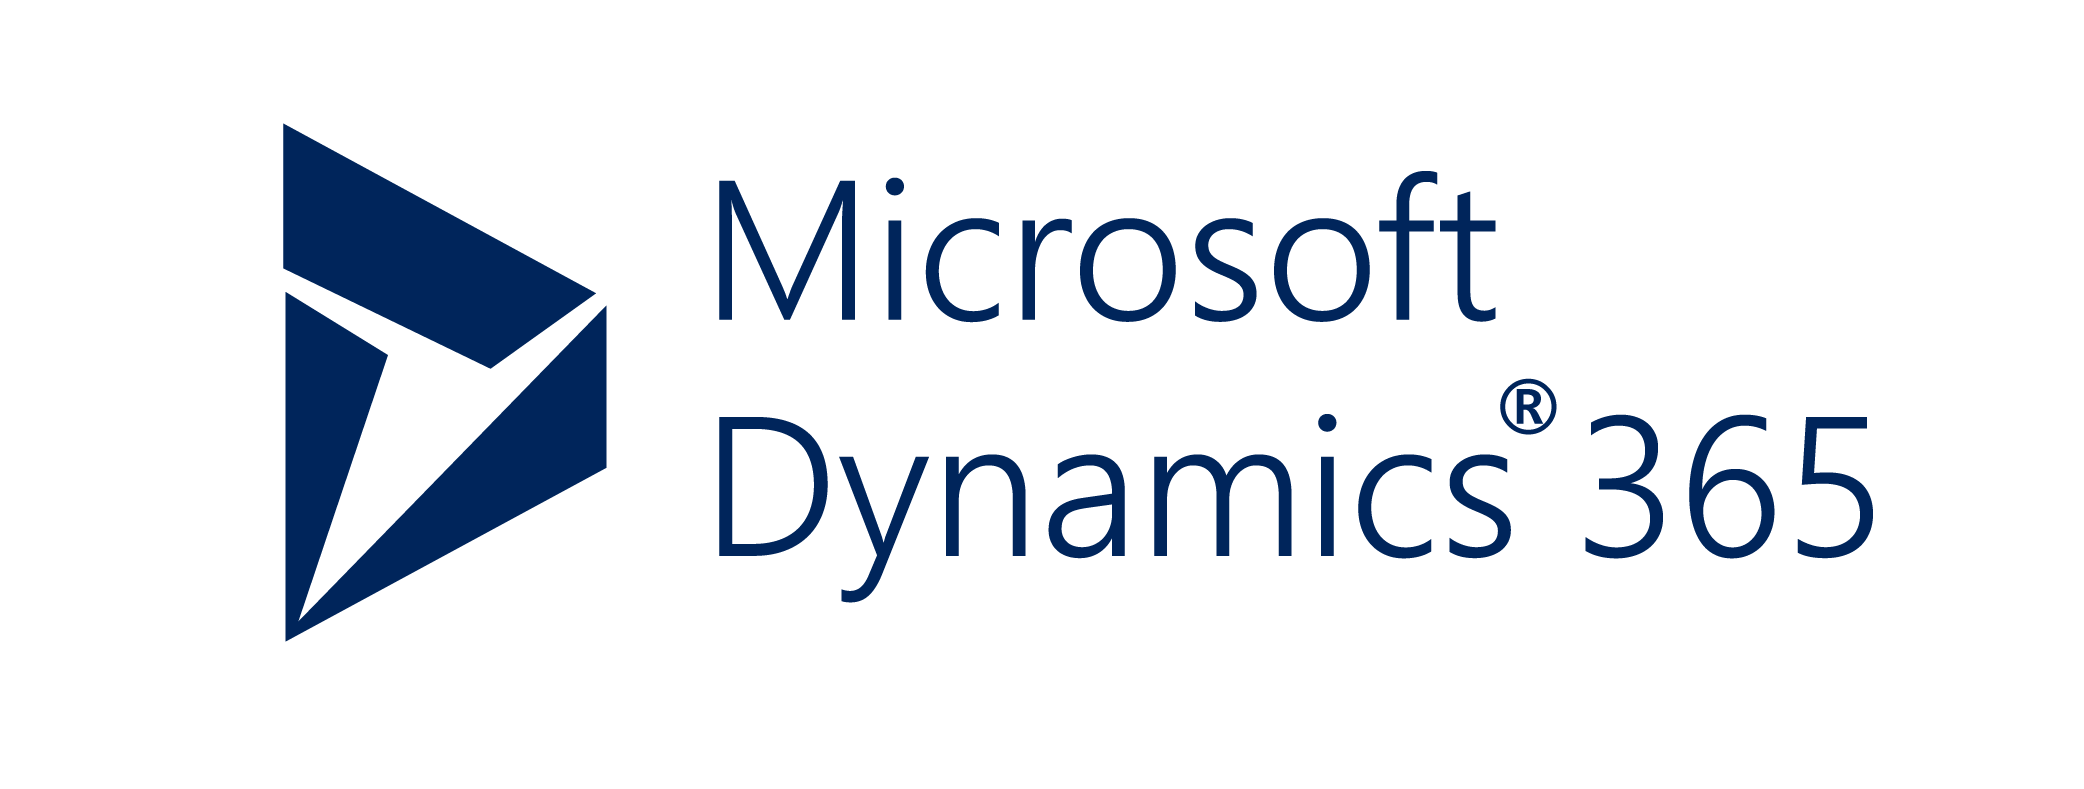 Dynamics 365 Logo - Dynamics-365-logo (1) | Planning, Forecasting, Consolidation for ...